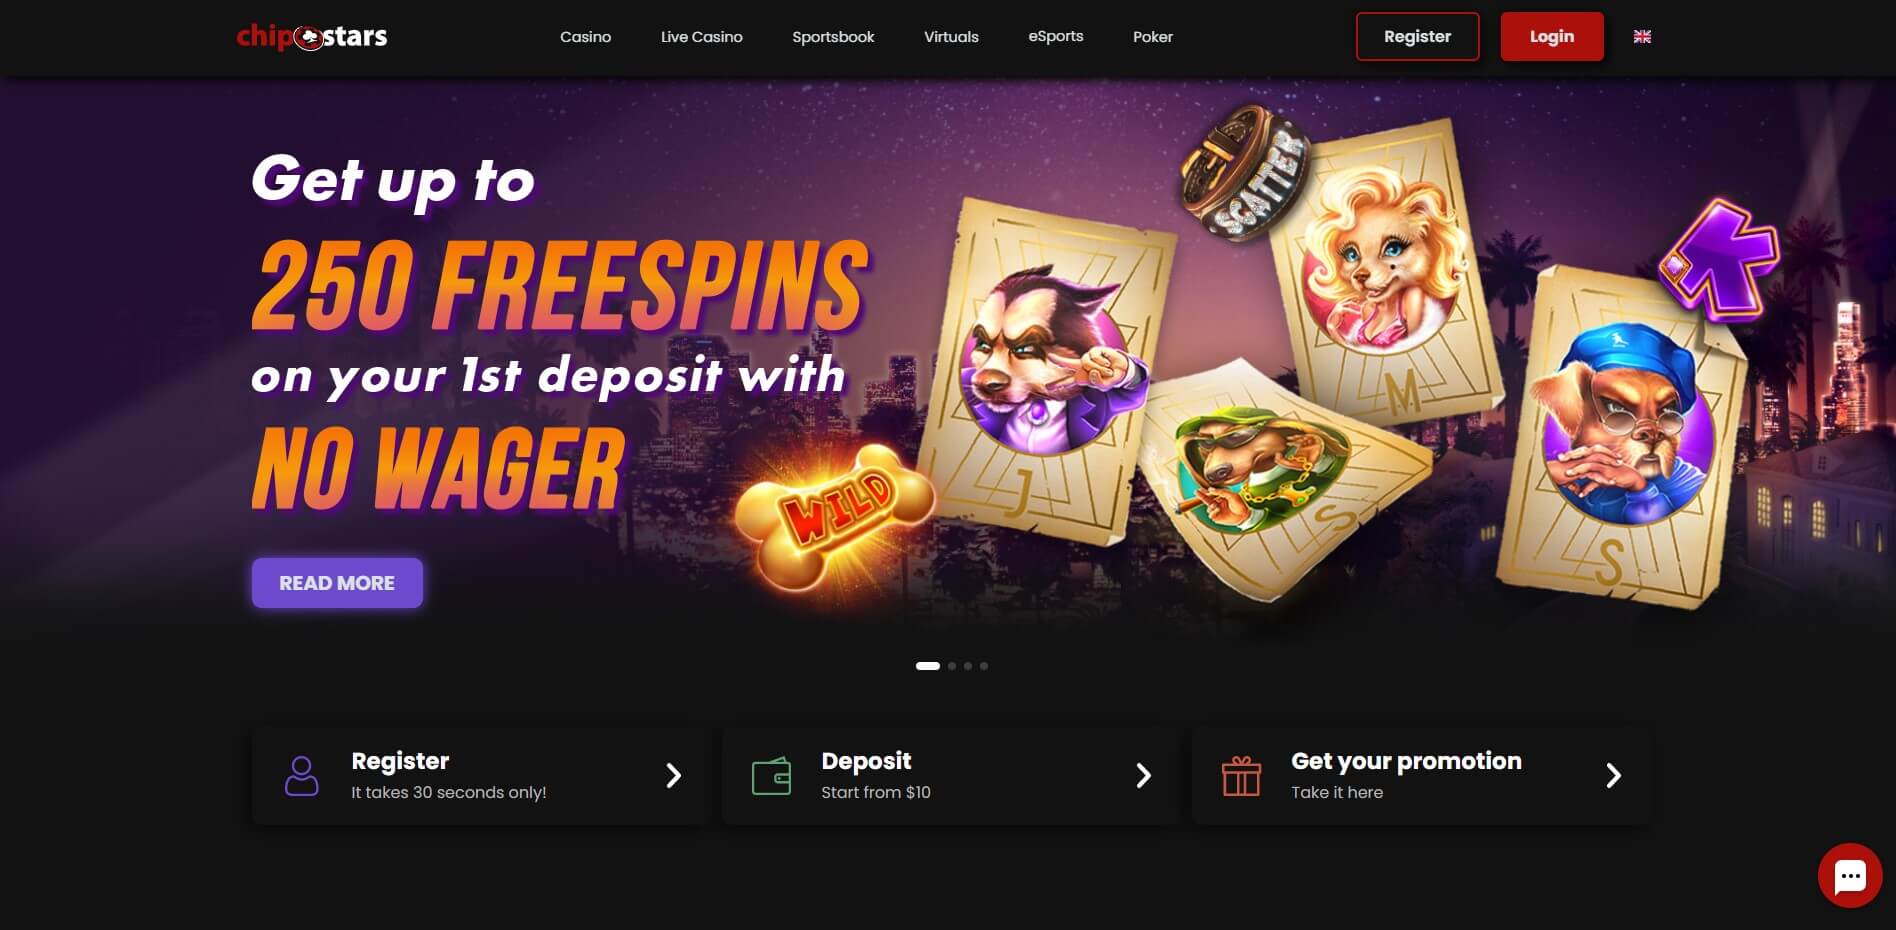 Chipstars casino Review